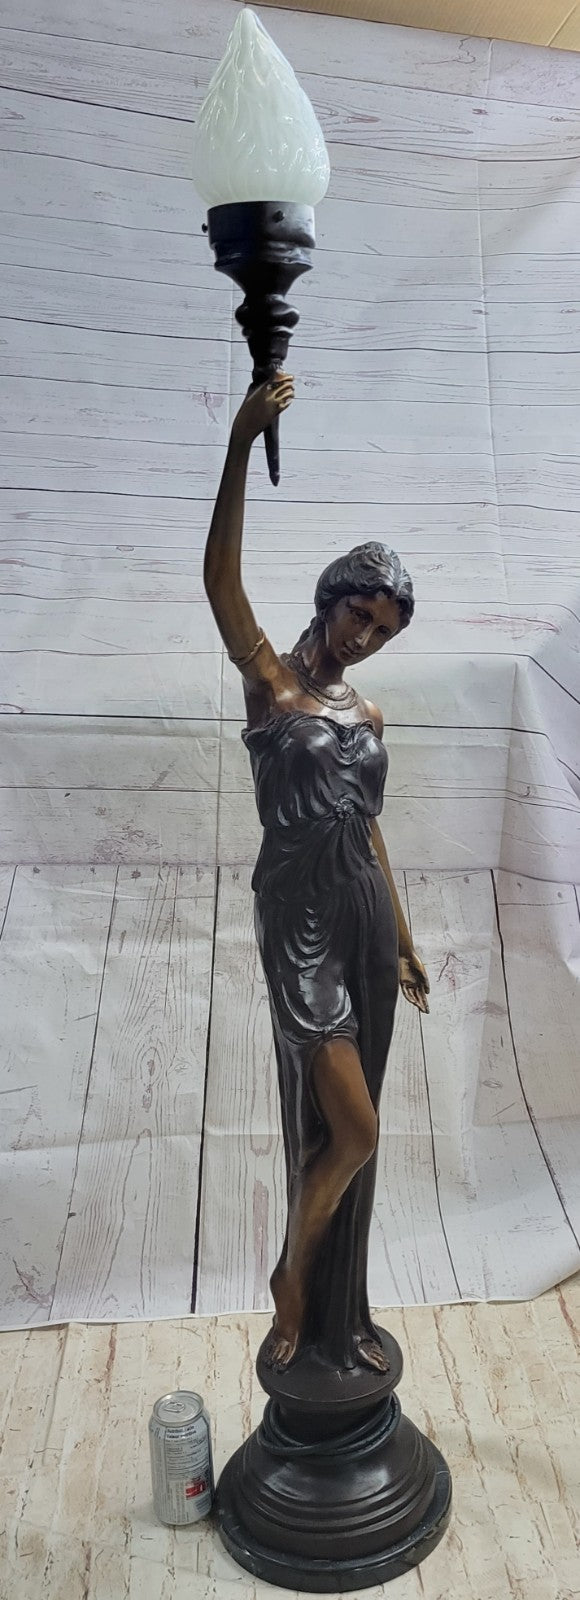 Art Deco/Nouveau Hot Cast Tall Woman French Lamp Bronze Sculpture Statue Deal